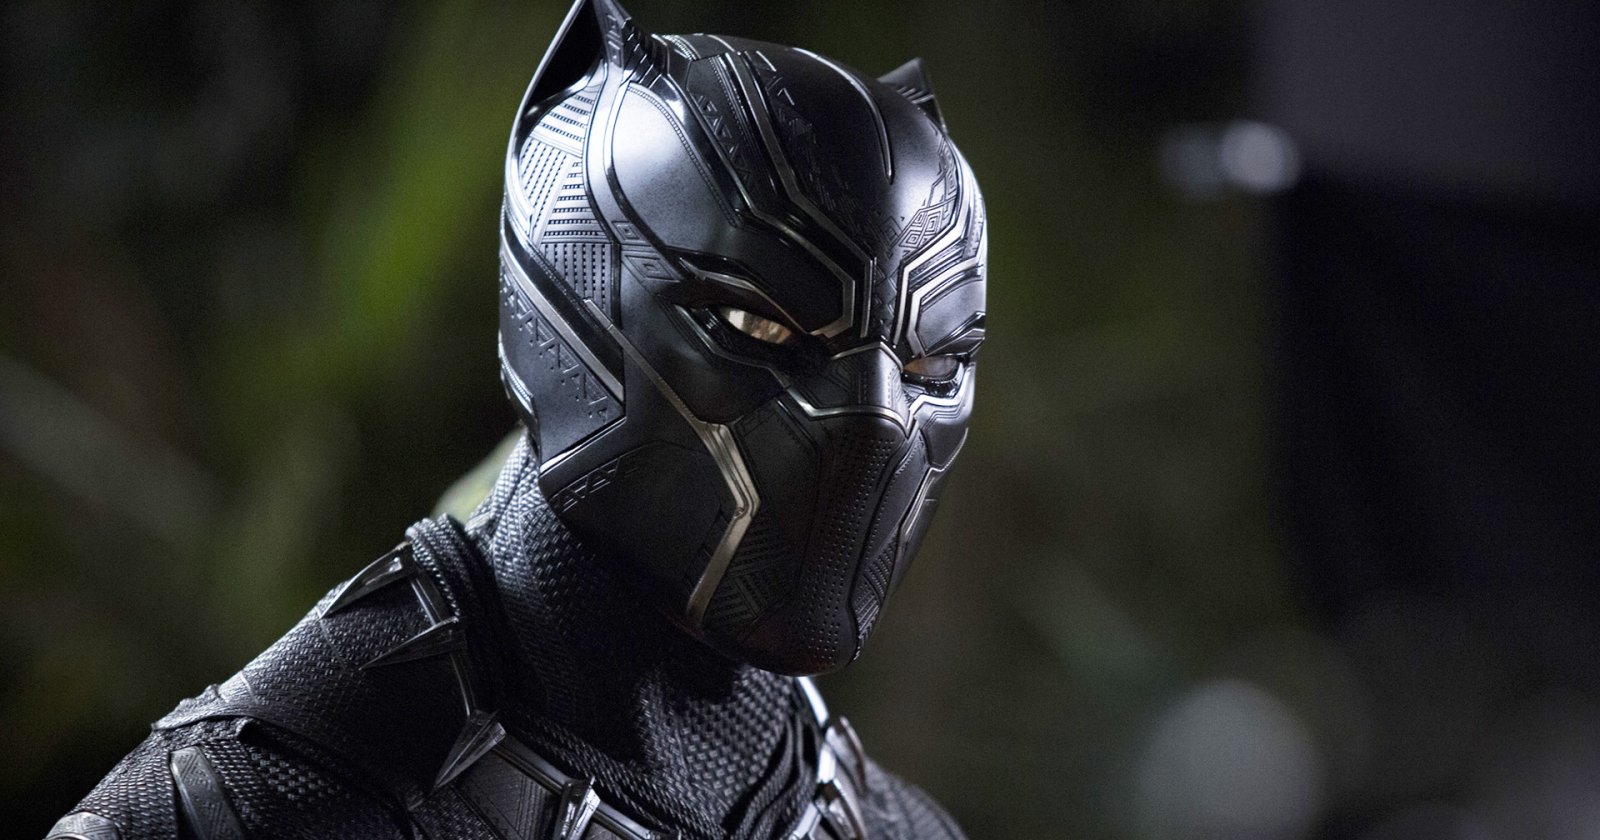 ‘Black Panther’ ได้รับโหวตเป็นหนังซูเปอร์ฮีโรที่ยิ่งใหญ่ที่สุดตลอดกาล